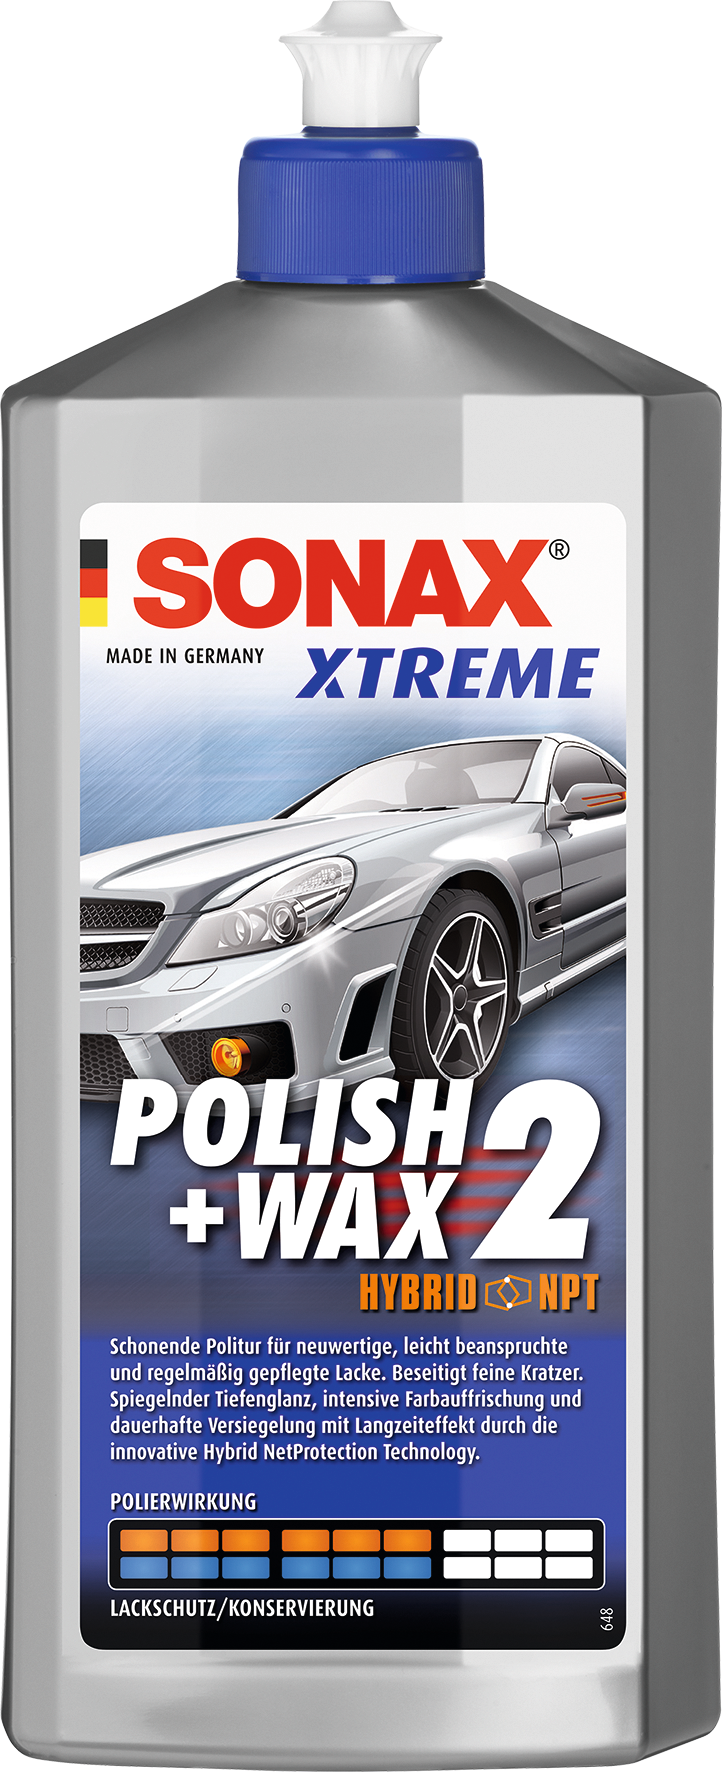 Schleifpolitur/Wachs Xtreme 500ml Polish + Wax 2 Hybrid